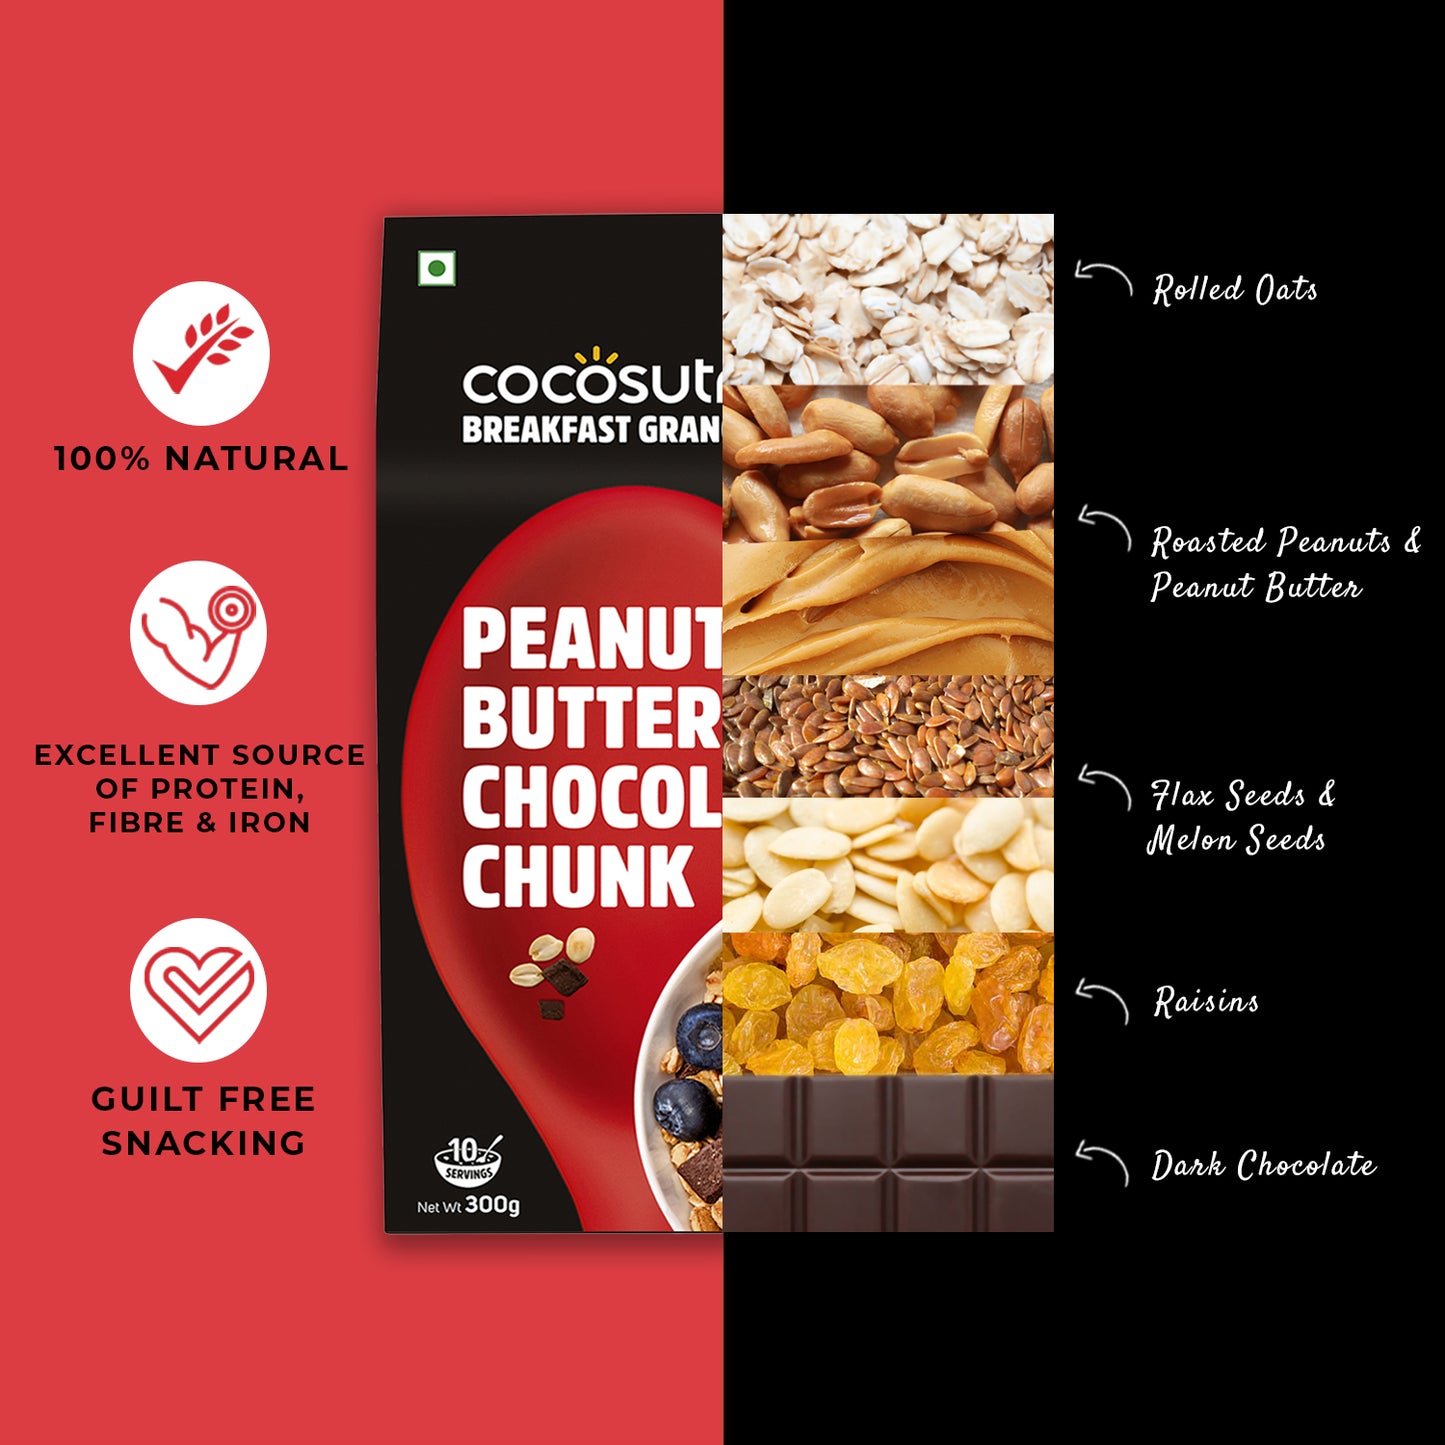 
                  
                    Cocosutra Granola - Peanut Butter Chocolate Chunk (300g)
                  
                